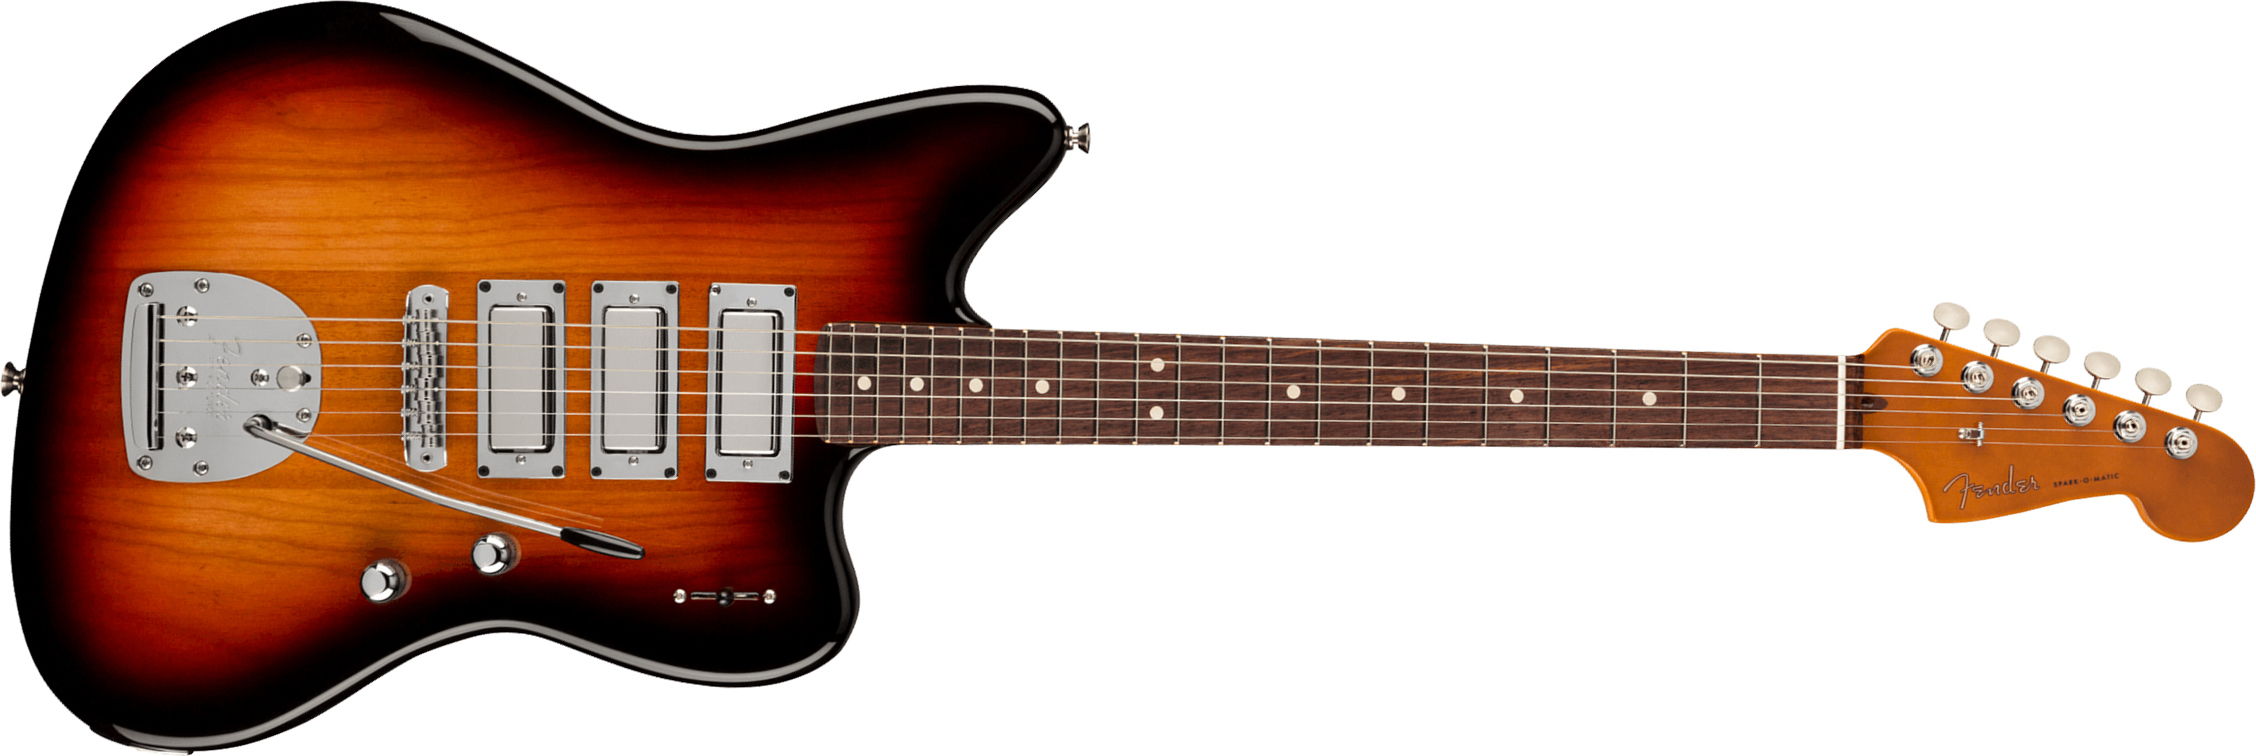 Fender Jazzmaster Spark-o-matic Volume Ii Parallel Universe Hhh Trem Rw - 3-color Sunburst - Retro-rock elektrische gitaar - Main picture